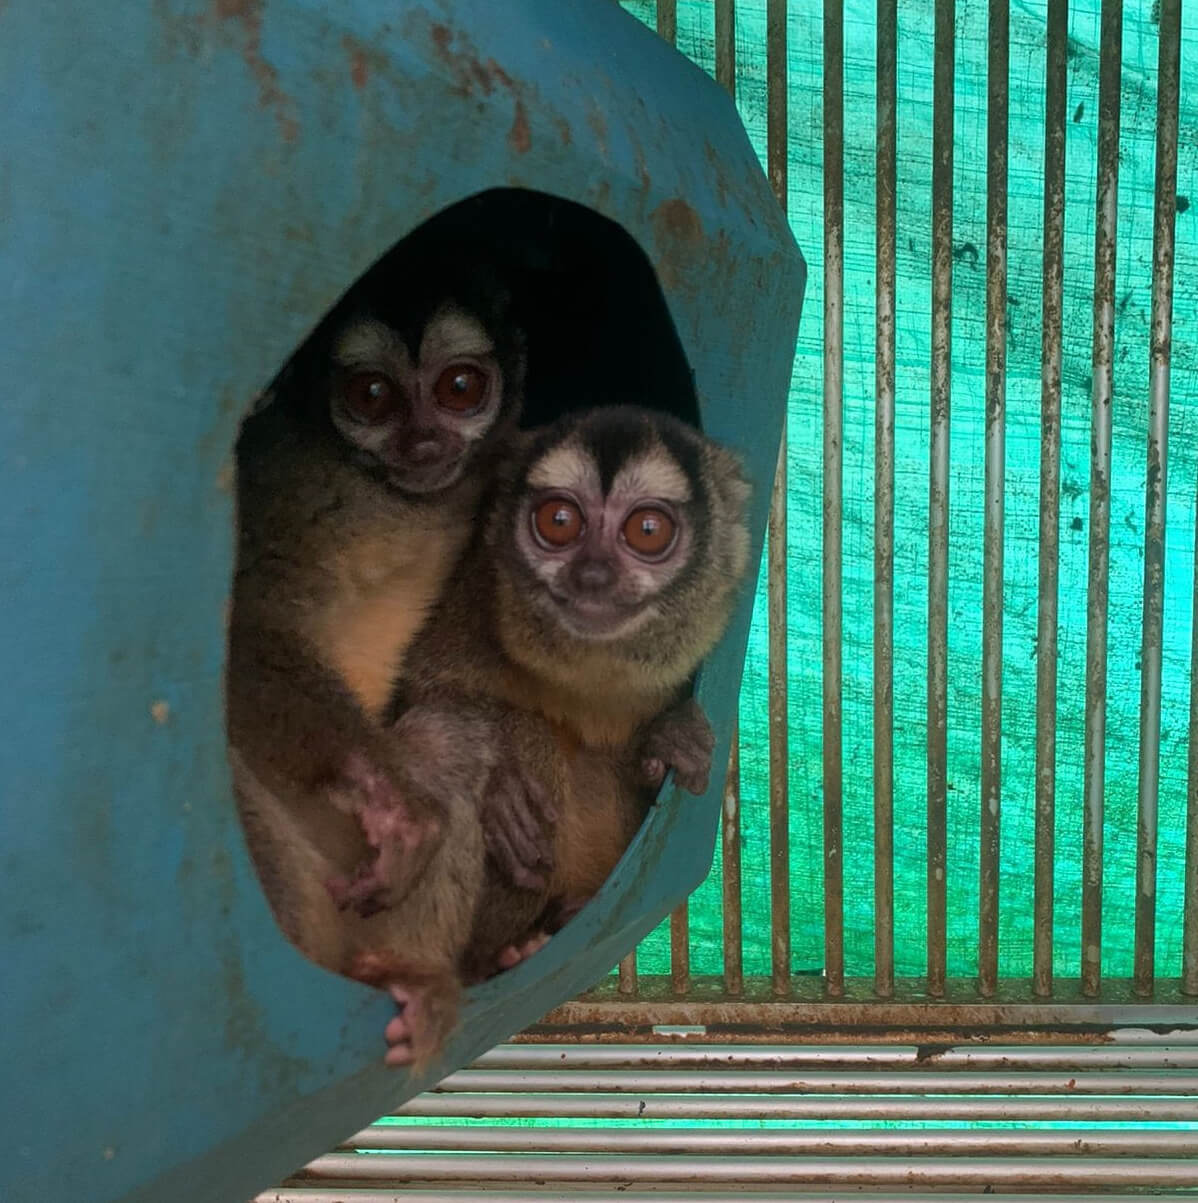 https://investigaciones.petalatino.com/wp-content/uploads/2022/11/VIV-Colombia-Fundacion-Centro-de-Primates-FUCEP-Aotus-monkeys-in-a-nest-cage-is-soiled-with-feces-PO-VS.jpg